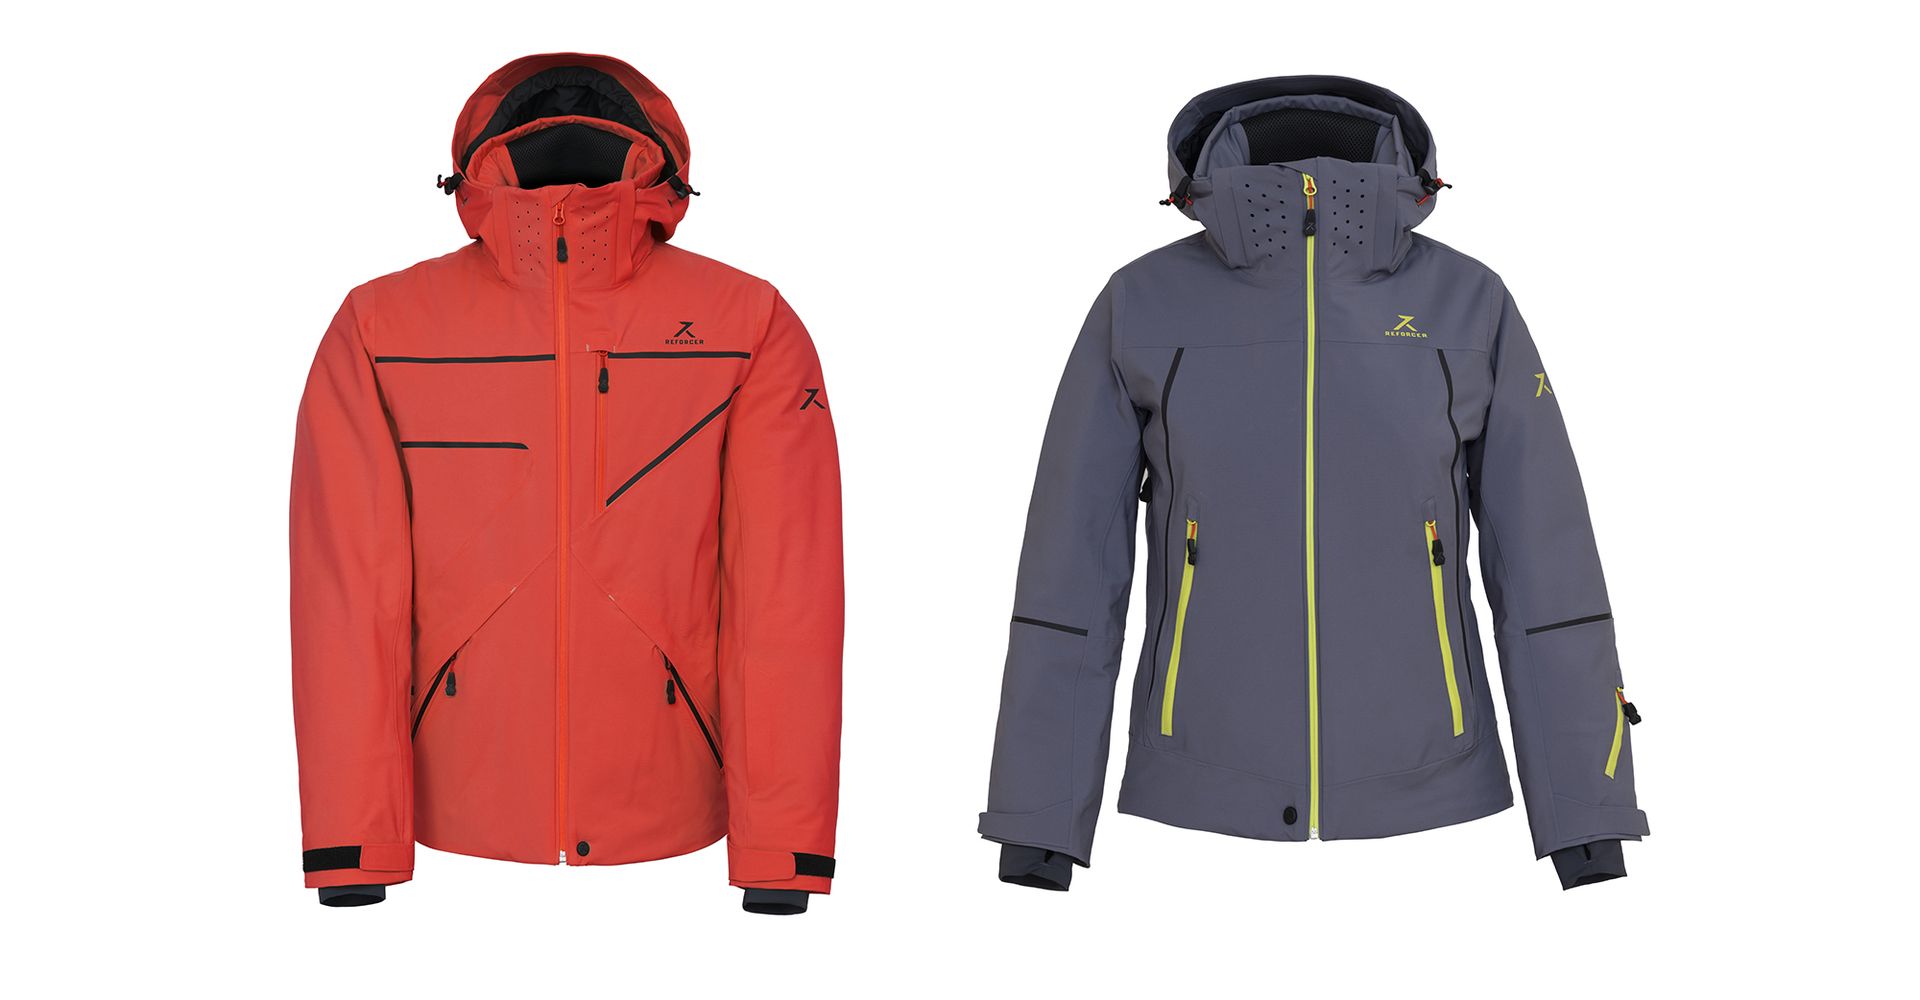 Chaqueta de esquí hombre Blue Edition - Reforcer, ropa de esquí de alta  calidad, hecha en Europa